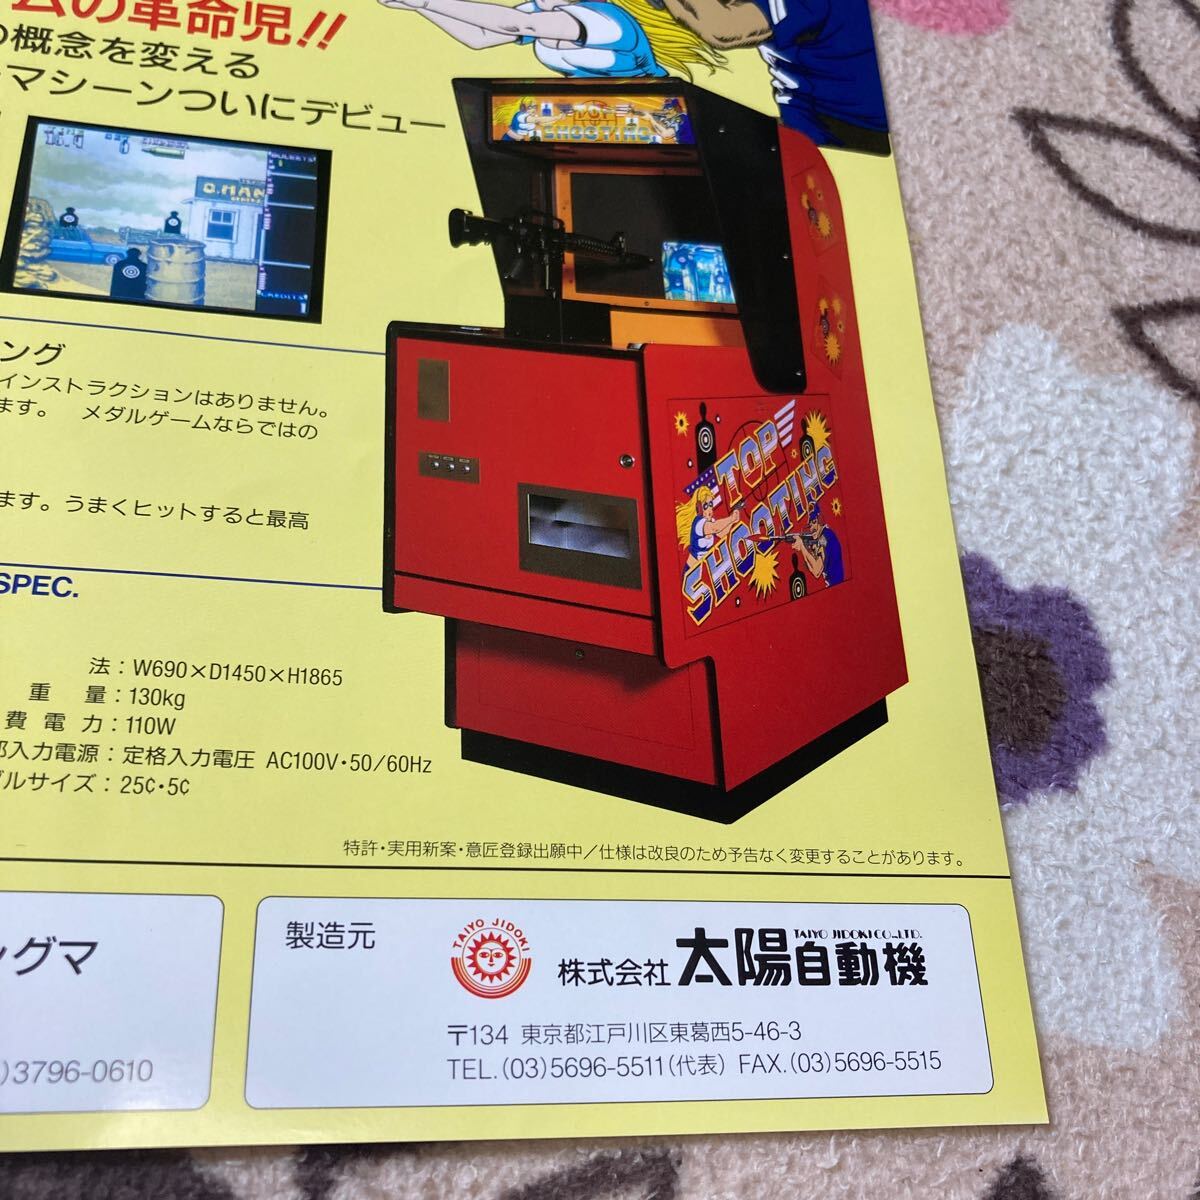  top shooting TOP SHOOTING Sigma SIGMA arcade leaflet catalog Flyer pamphlet regular goods rare not for sale ..